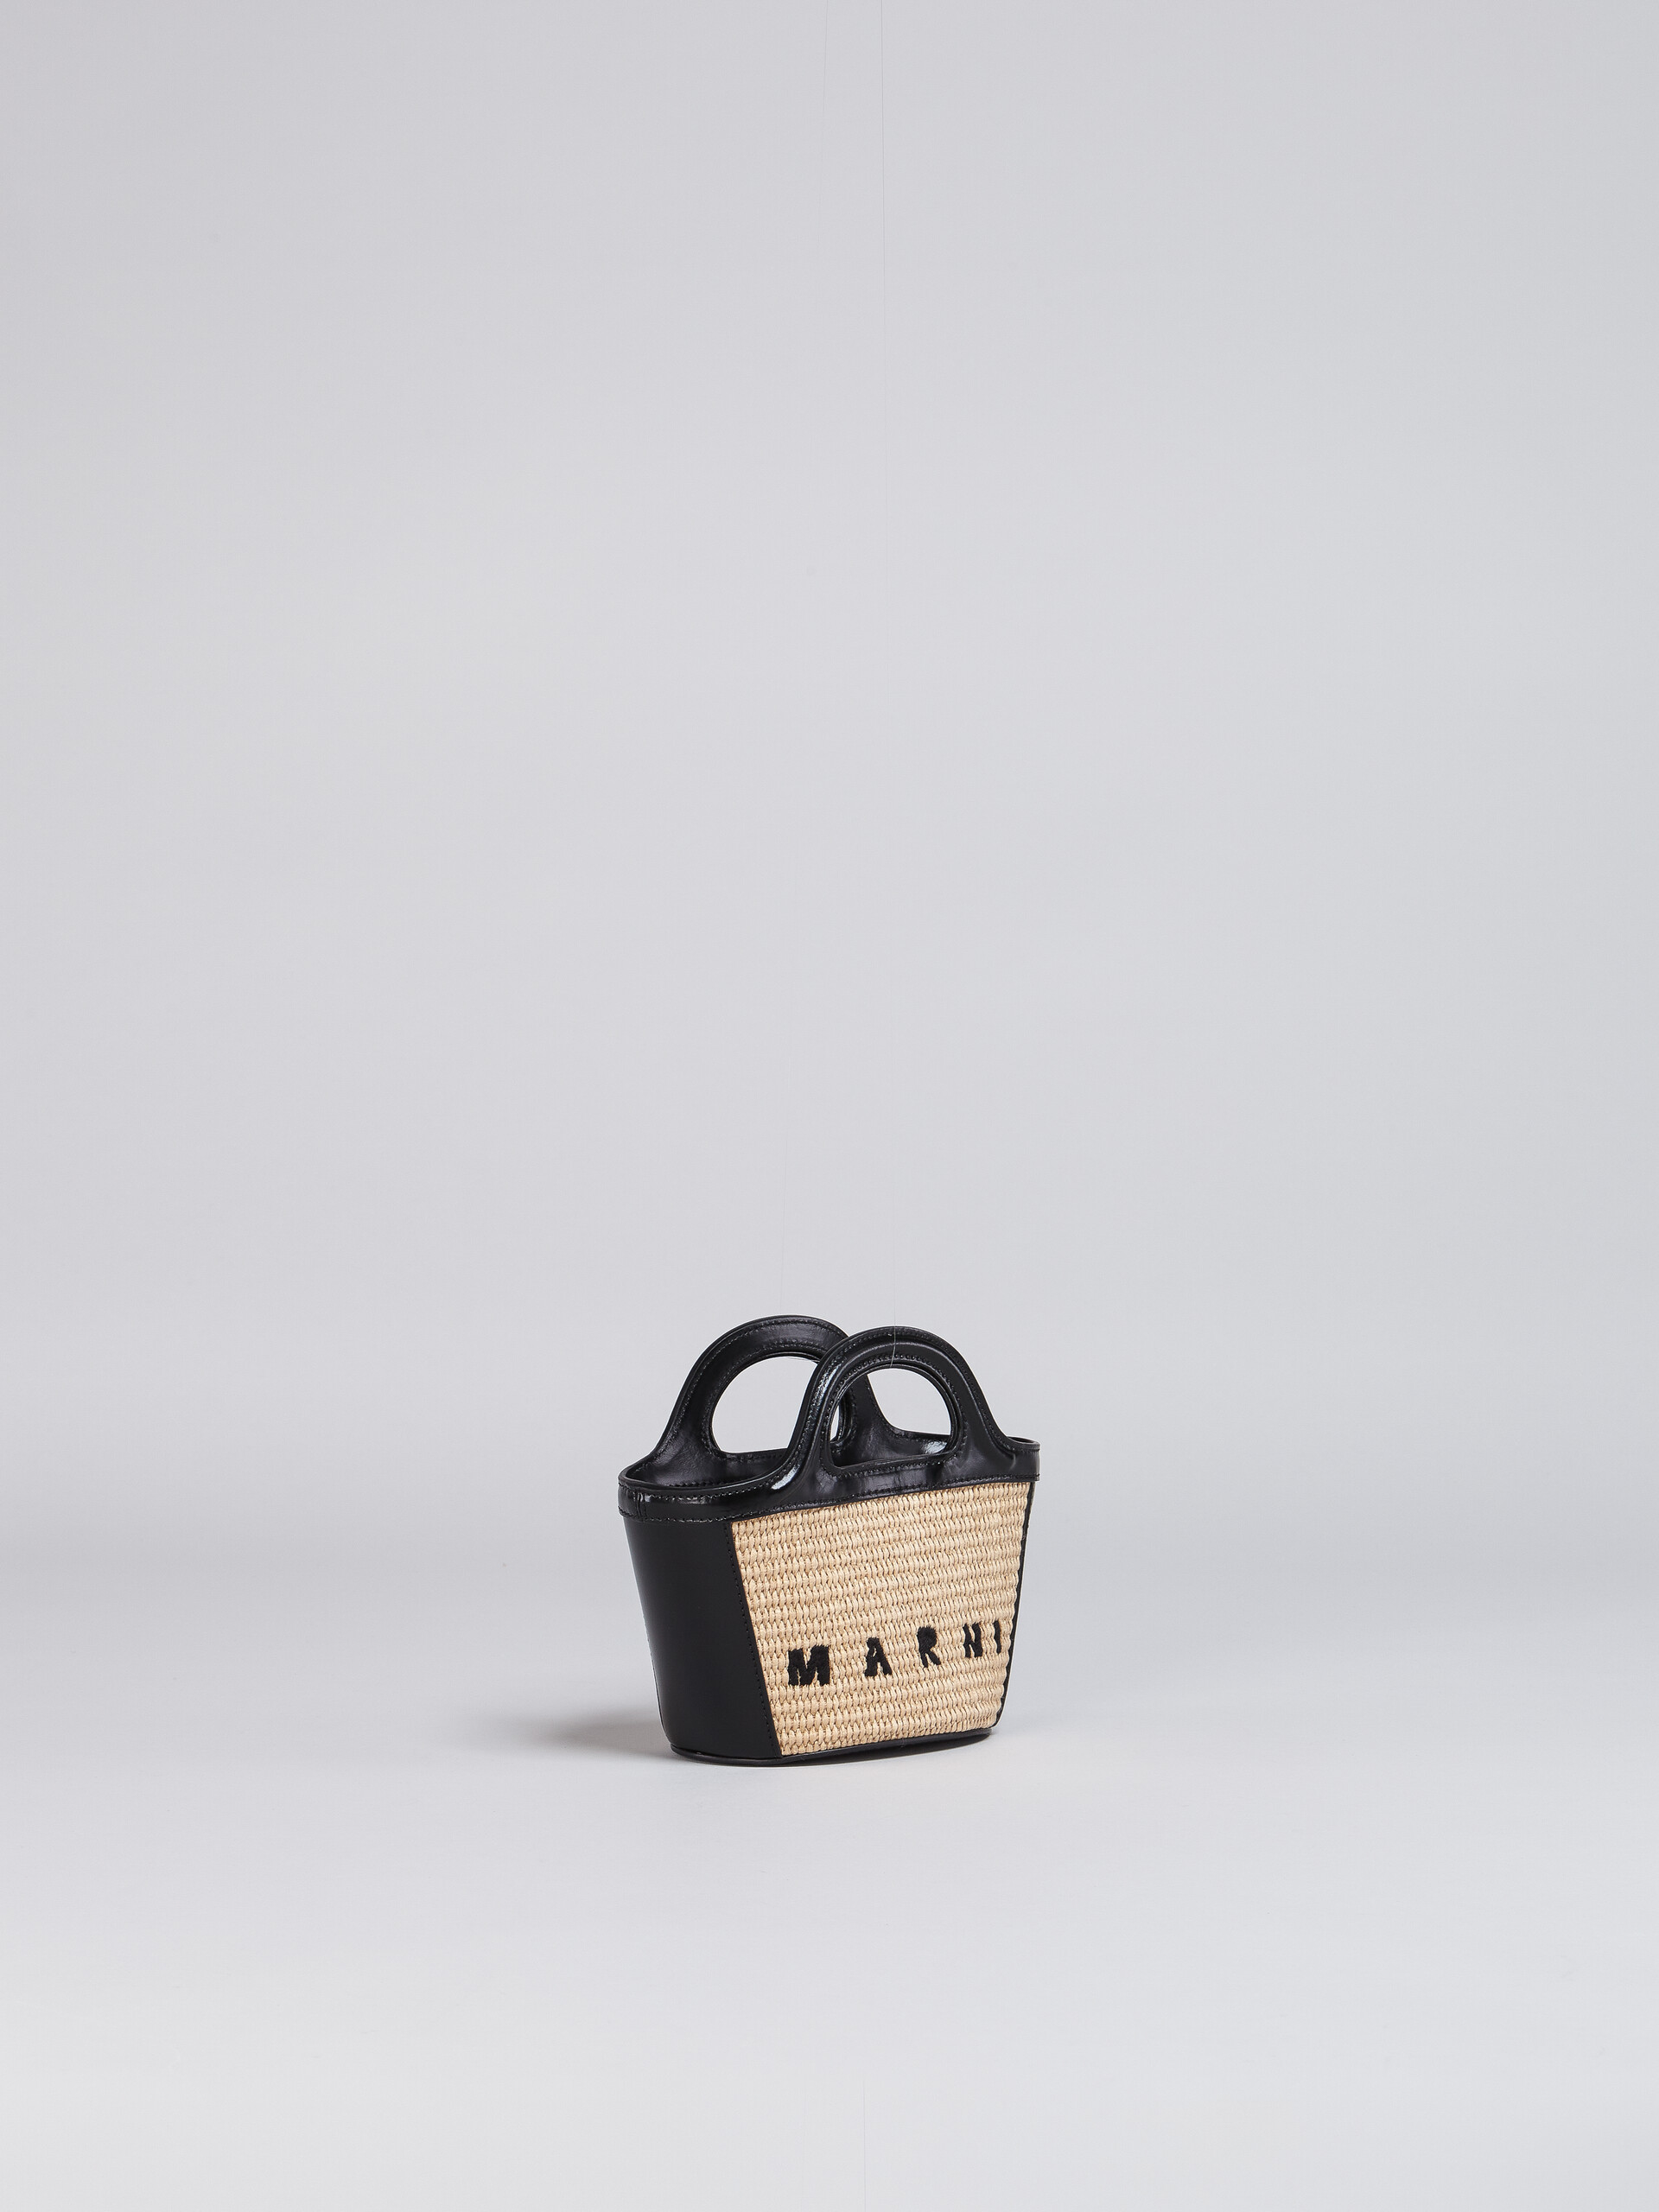 Black leather and raffia micro TROPICALIA SUMMER bag - Handbag - Image 2